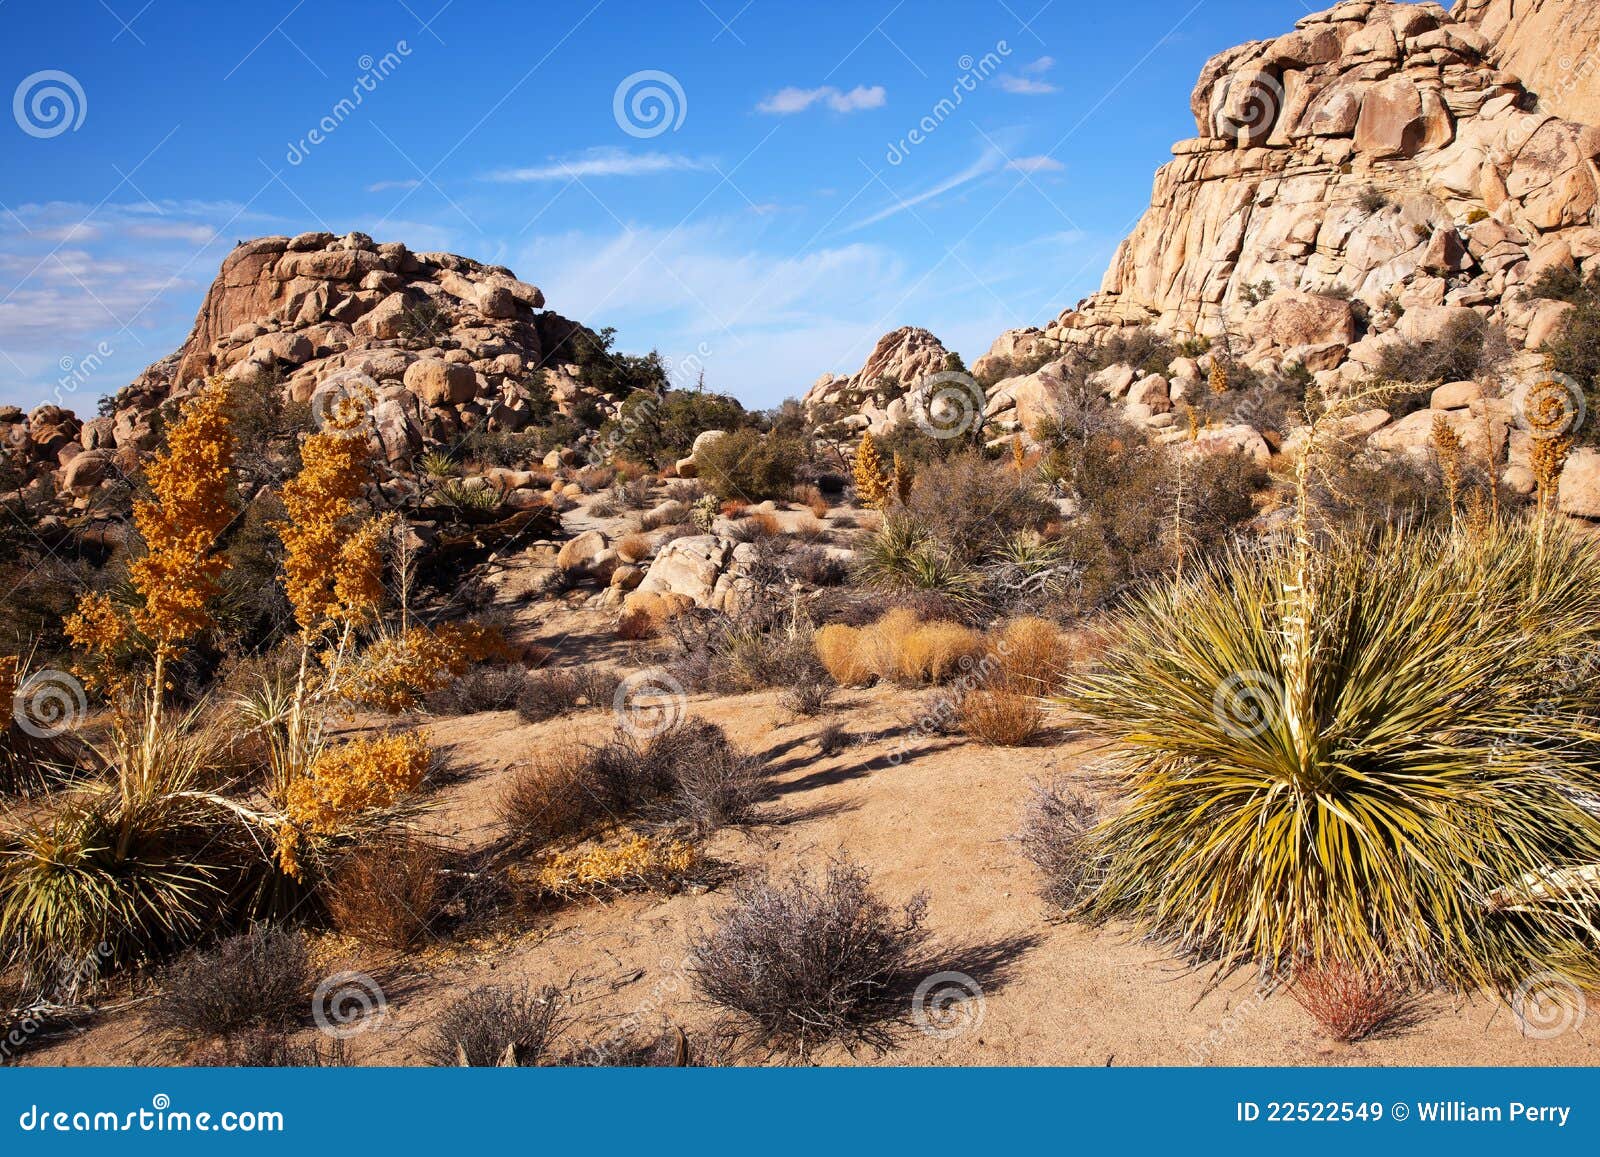 Yucca Nolina Beargrass Joshua Tree National Park Stock Image - Image of ...